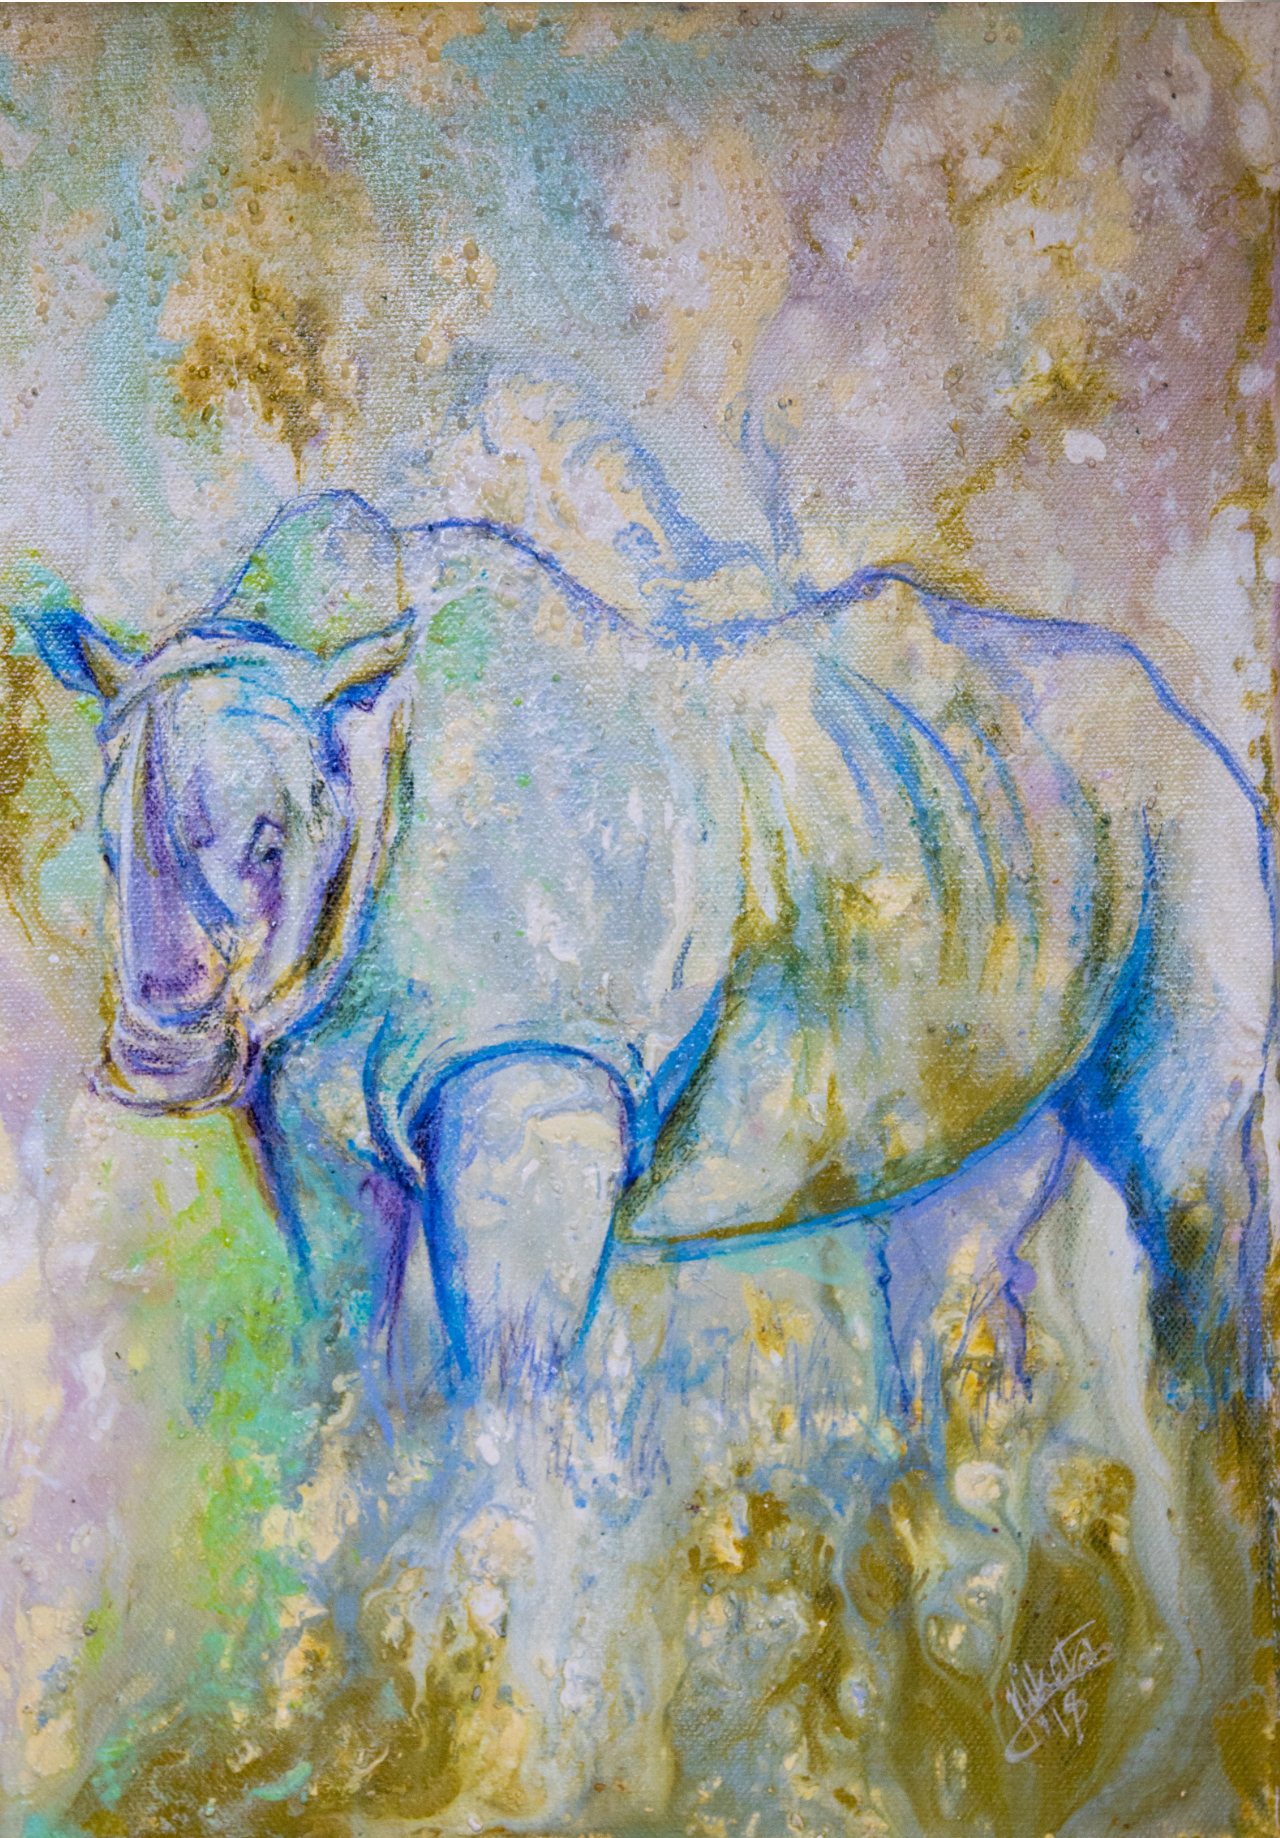 the last rhino painting